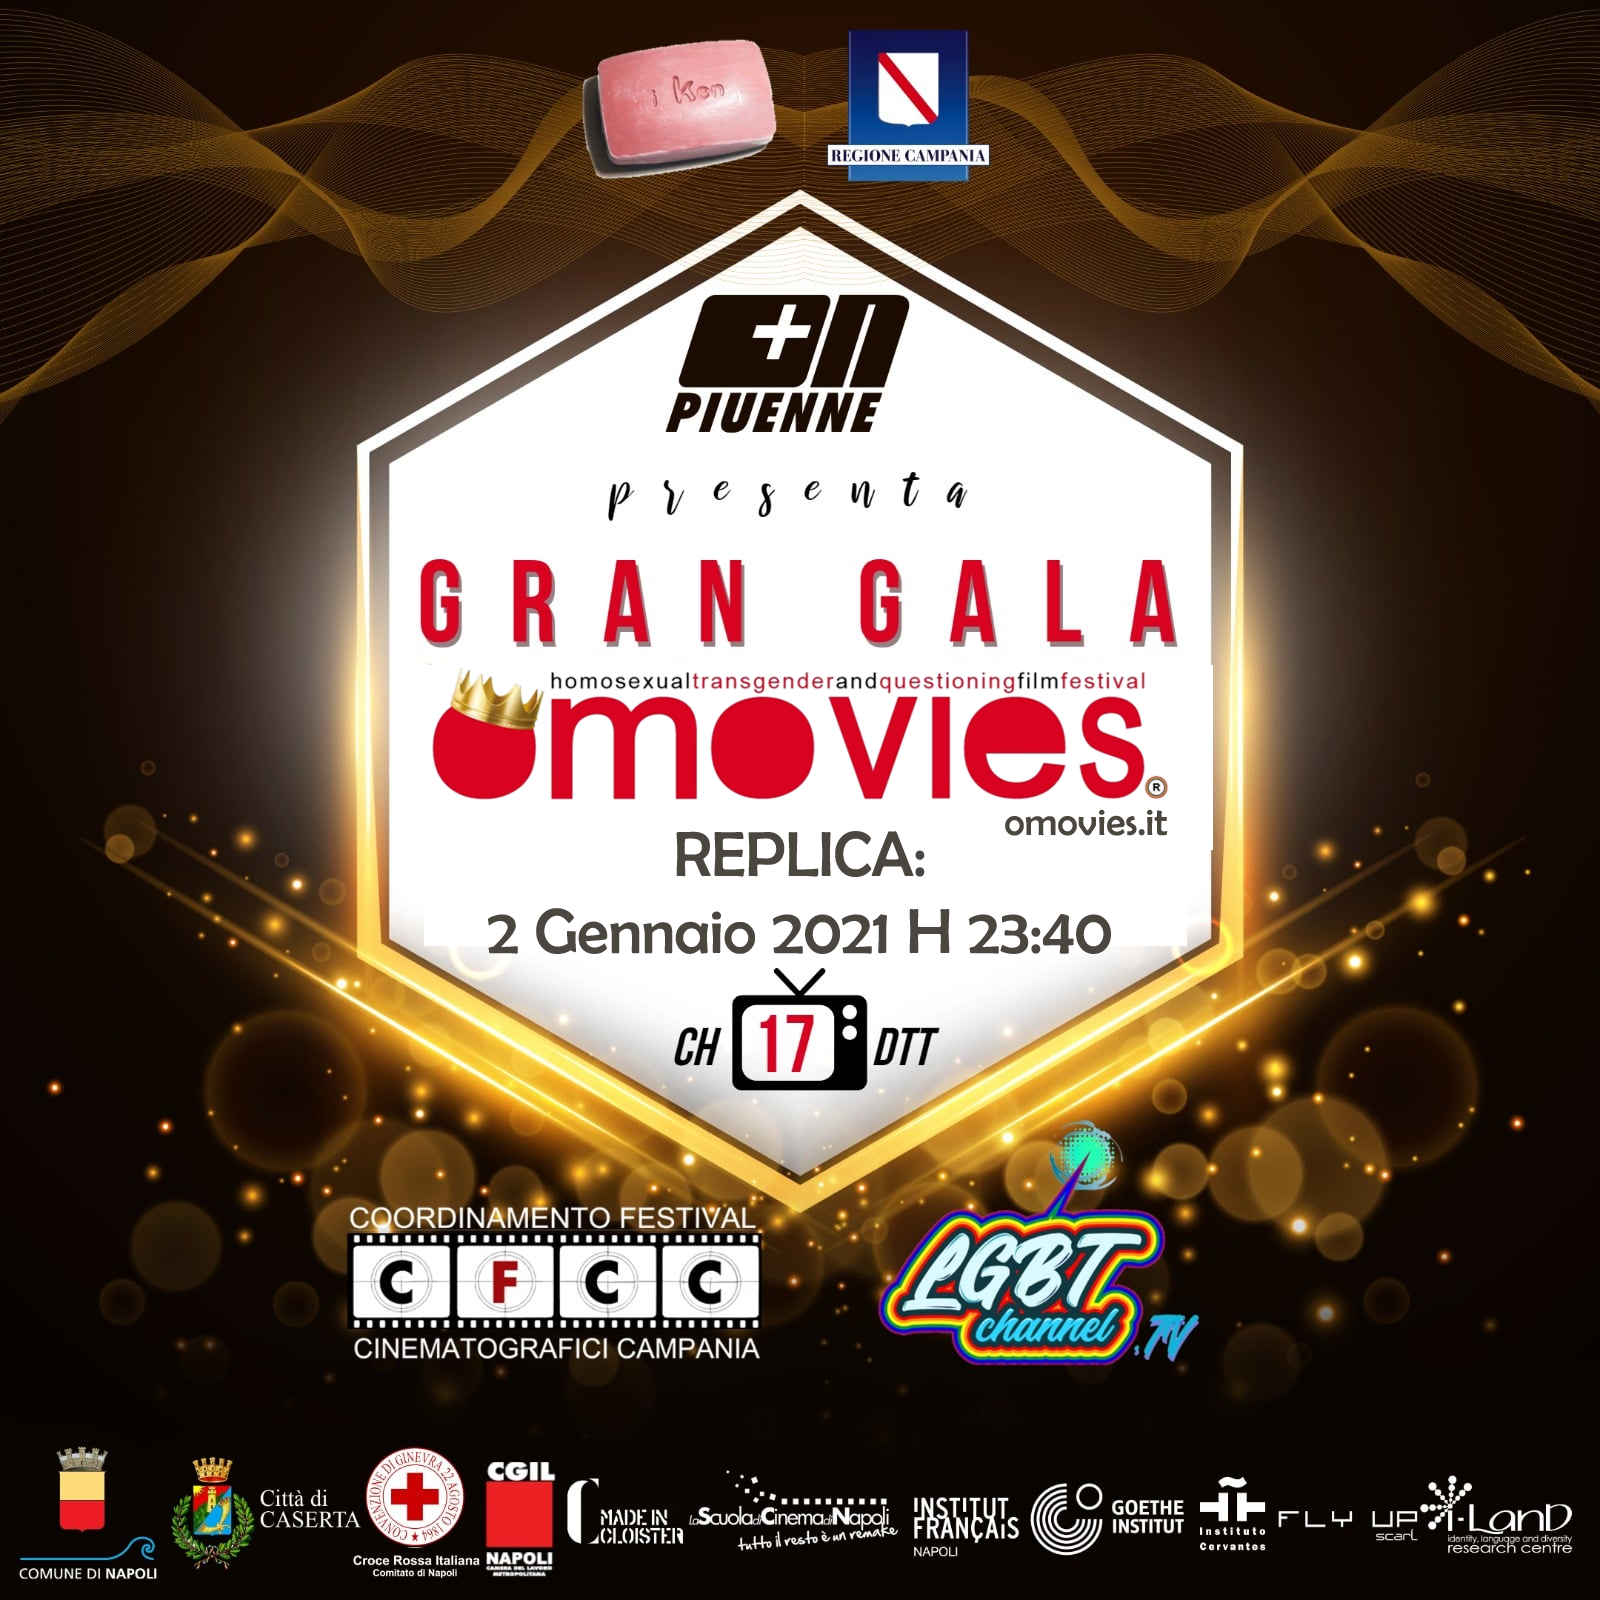 Gran Gala di Omovies – 🏳️‍🌈 Replica oggi 2 Gennaio 2021 h 23:40 su Piuenne TV